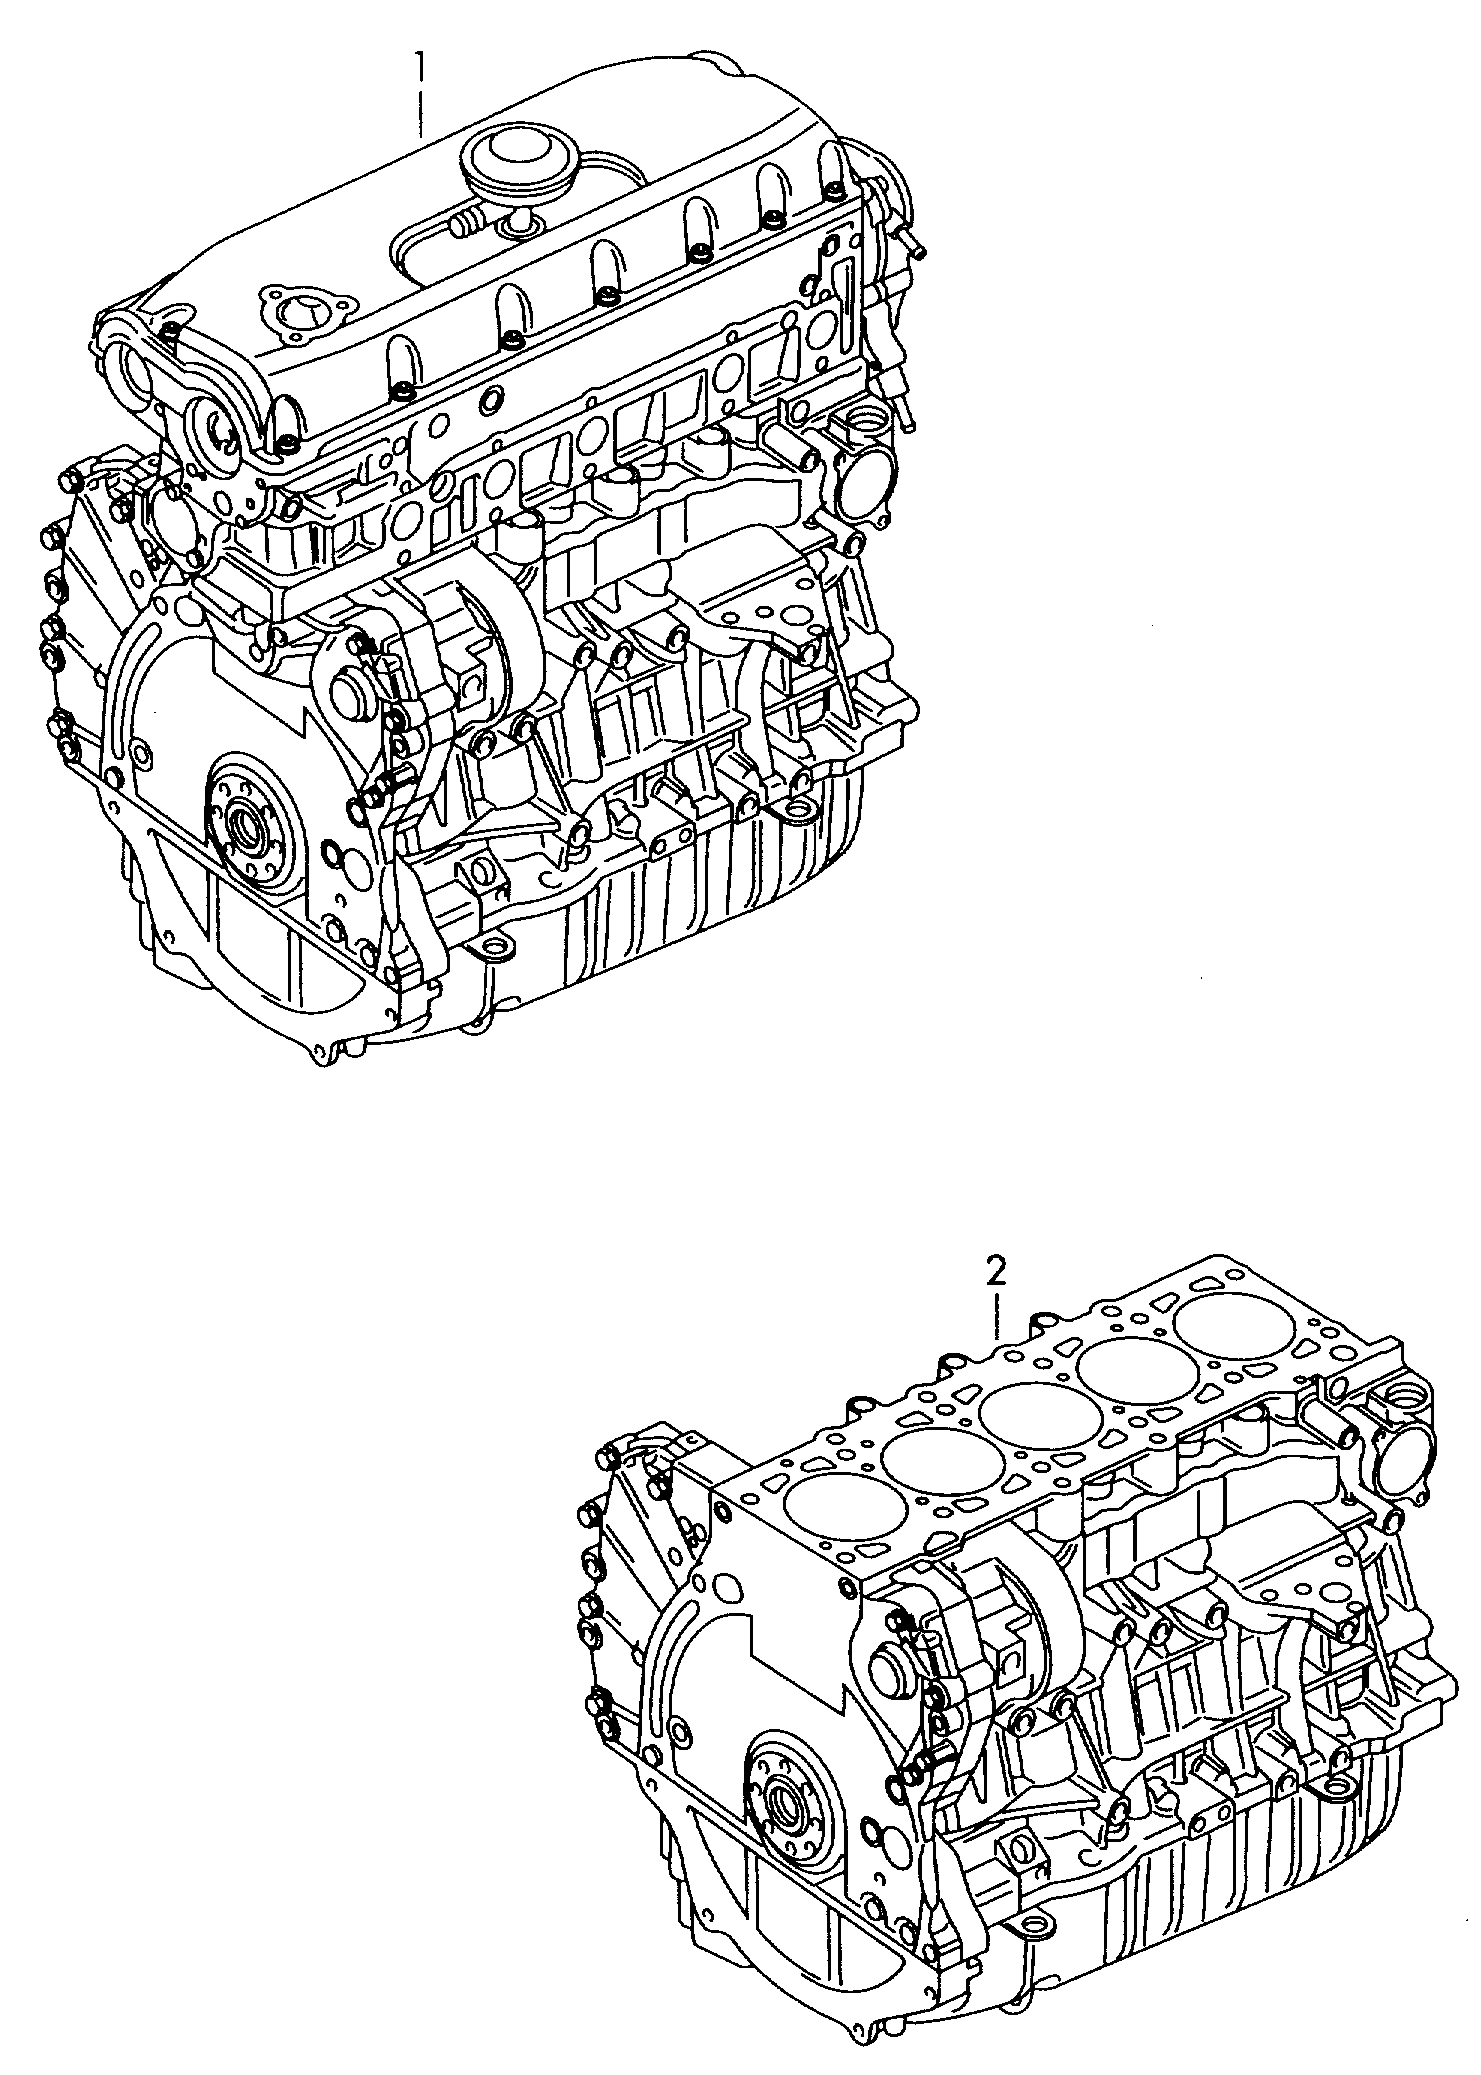 Motore parziale 2,5l - Transporter - tr